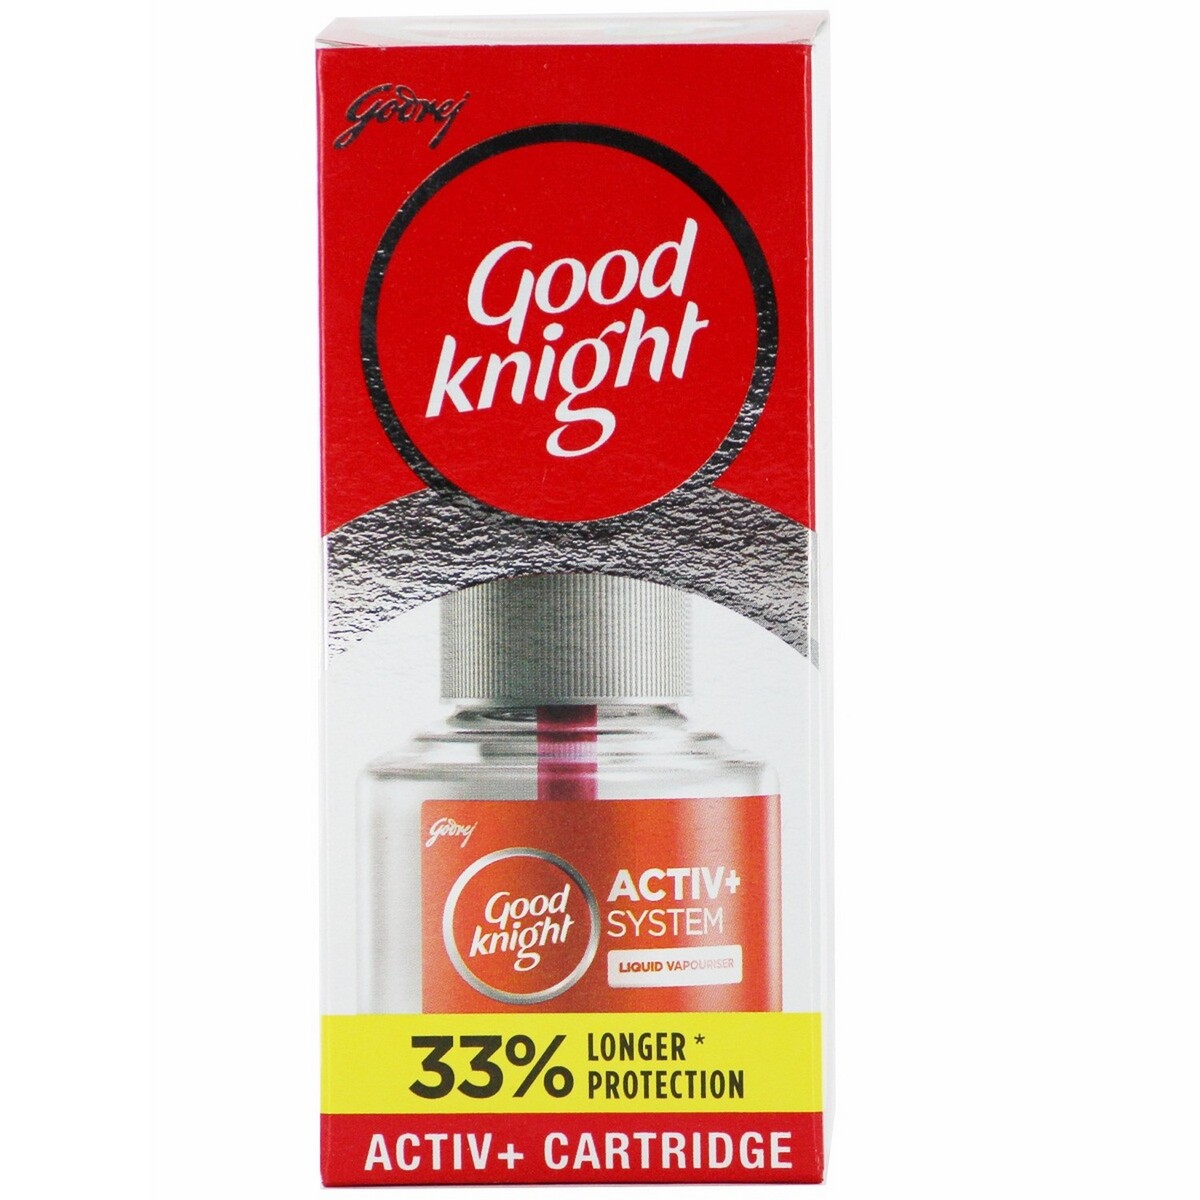 Good Knight Active+ Cartridge Liquid Vapouriser 45ml